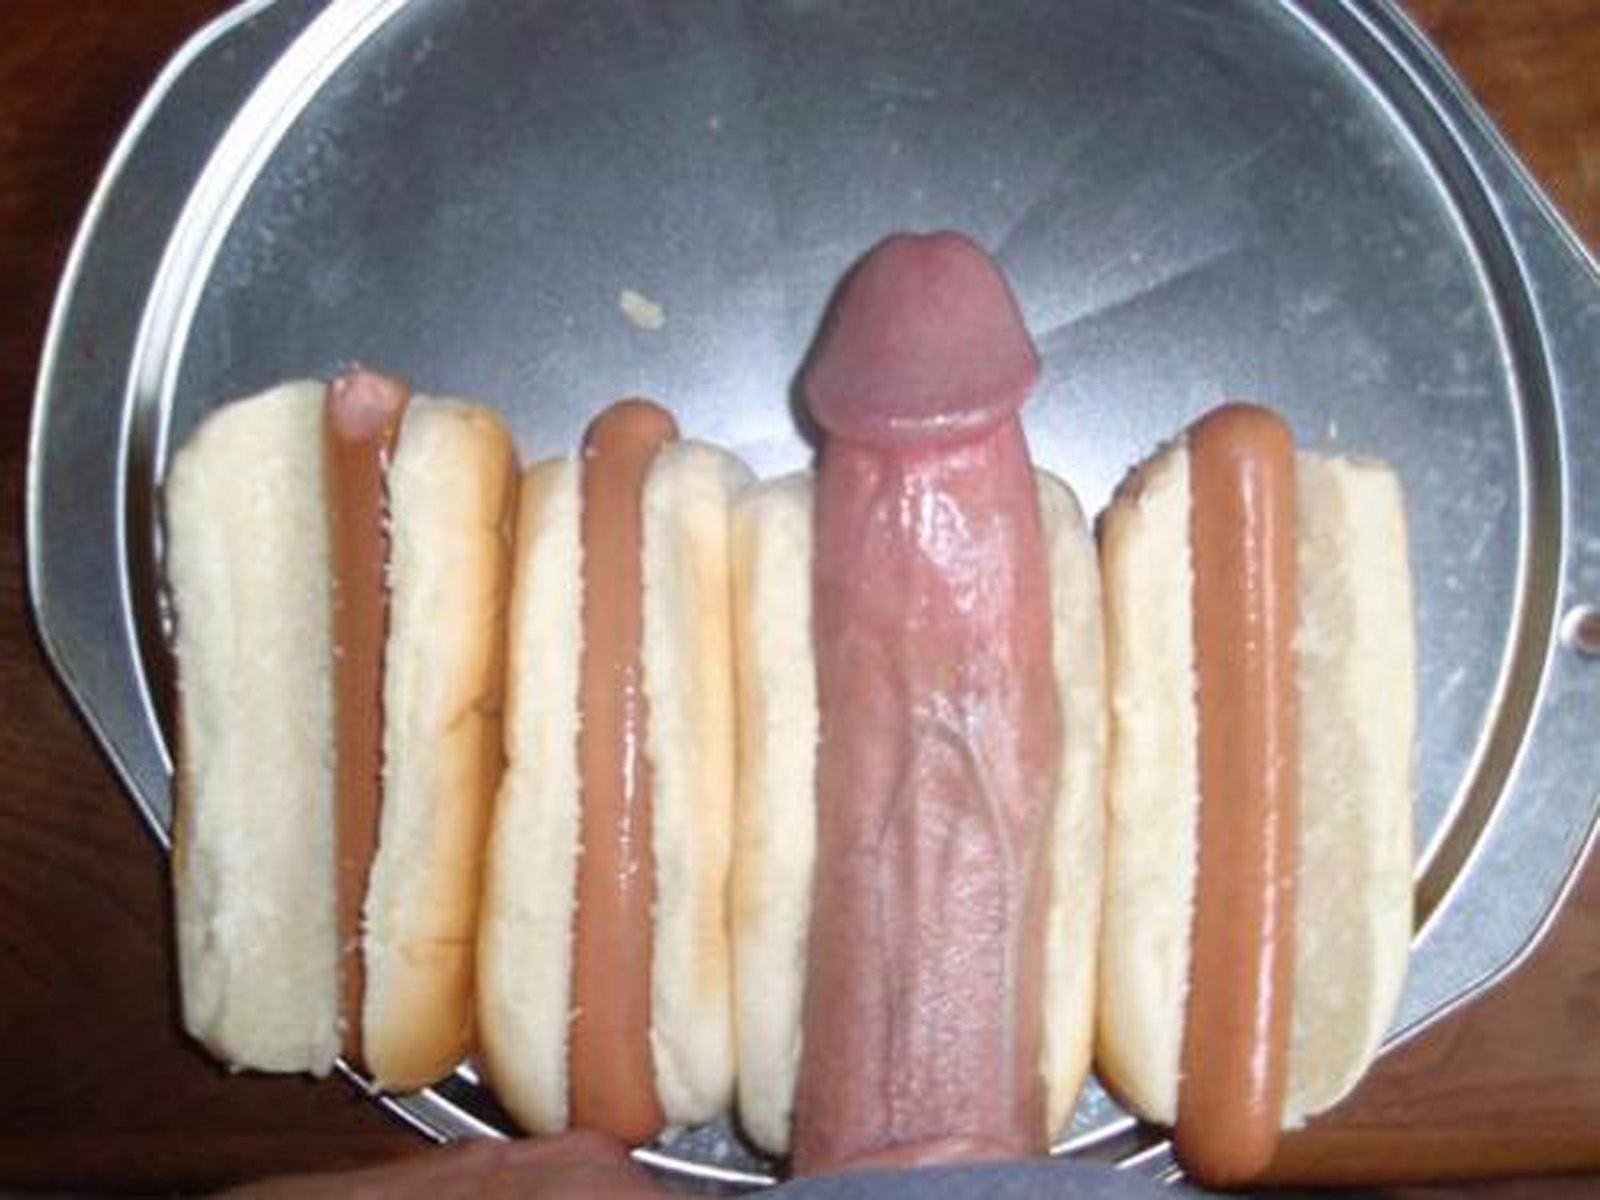 Dicks hot dogs